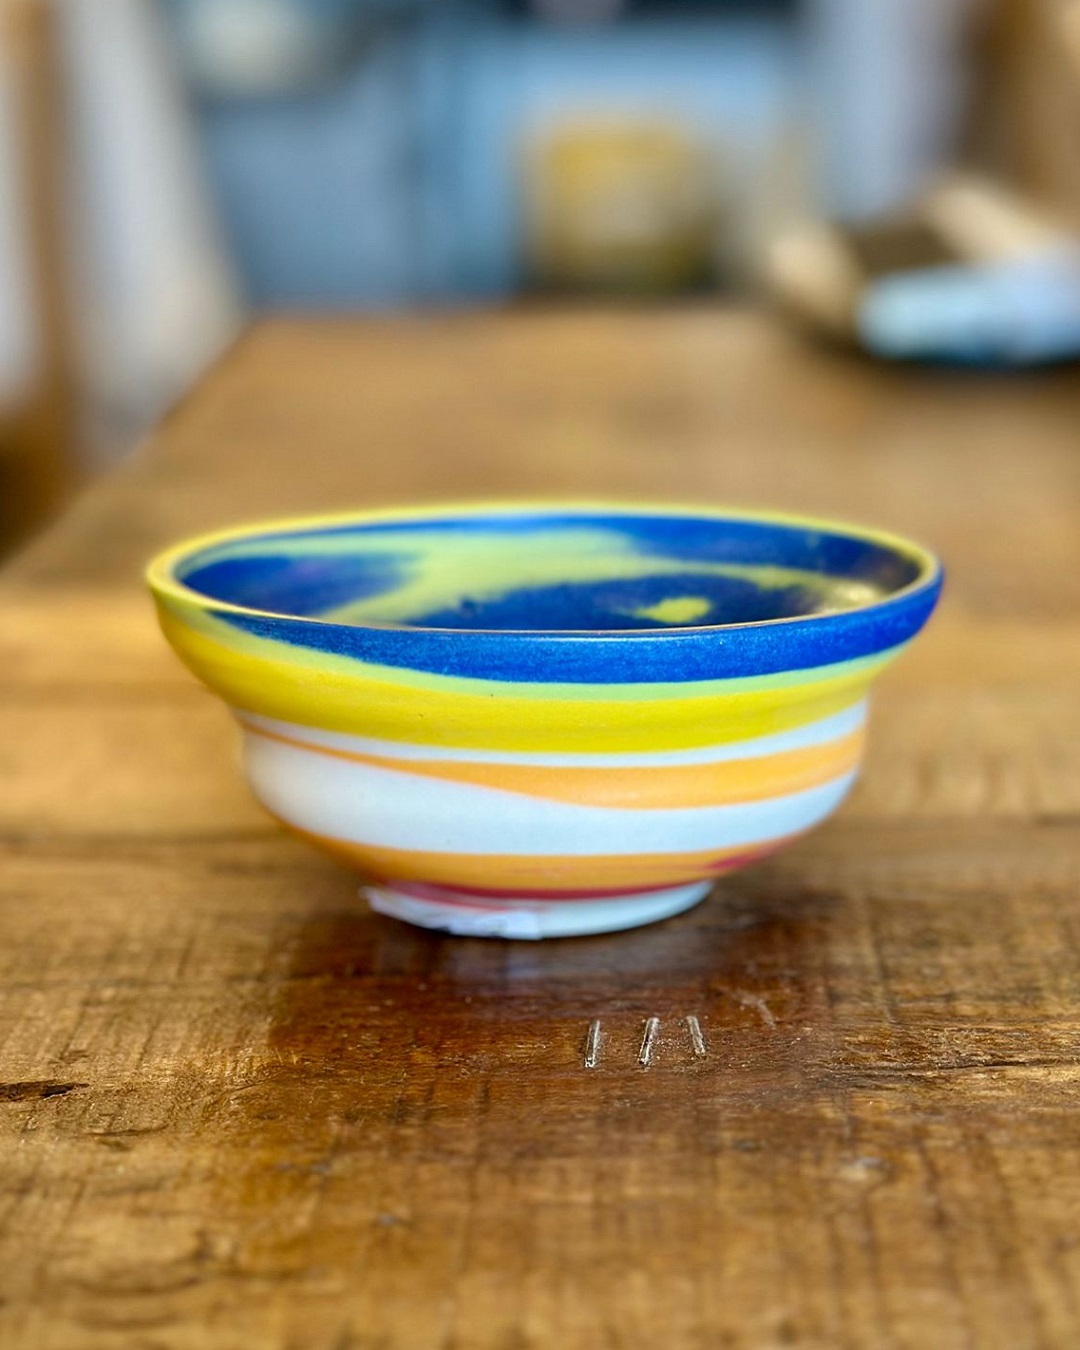 Rainbow ceramic bowl on wooden table